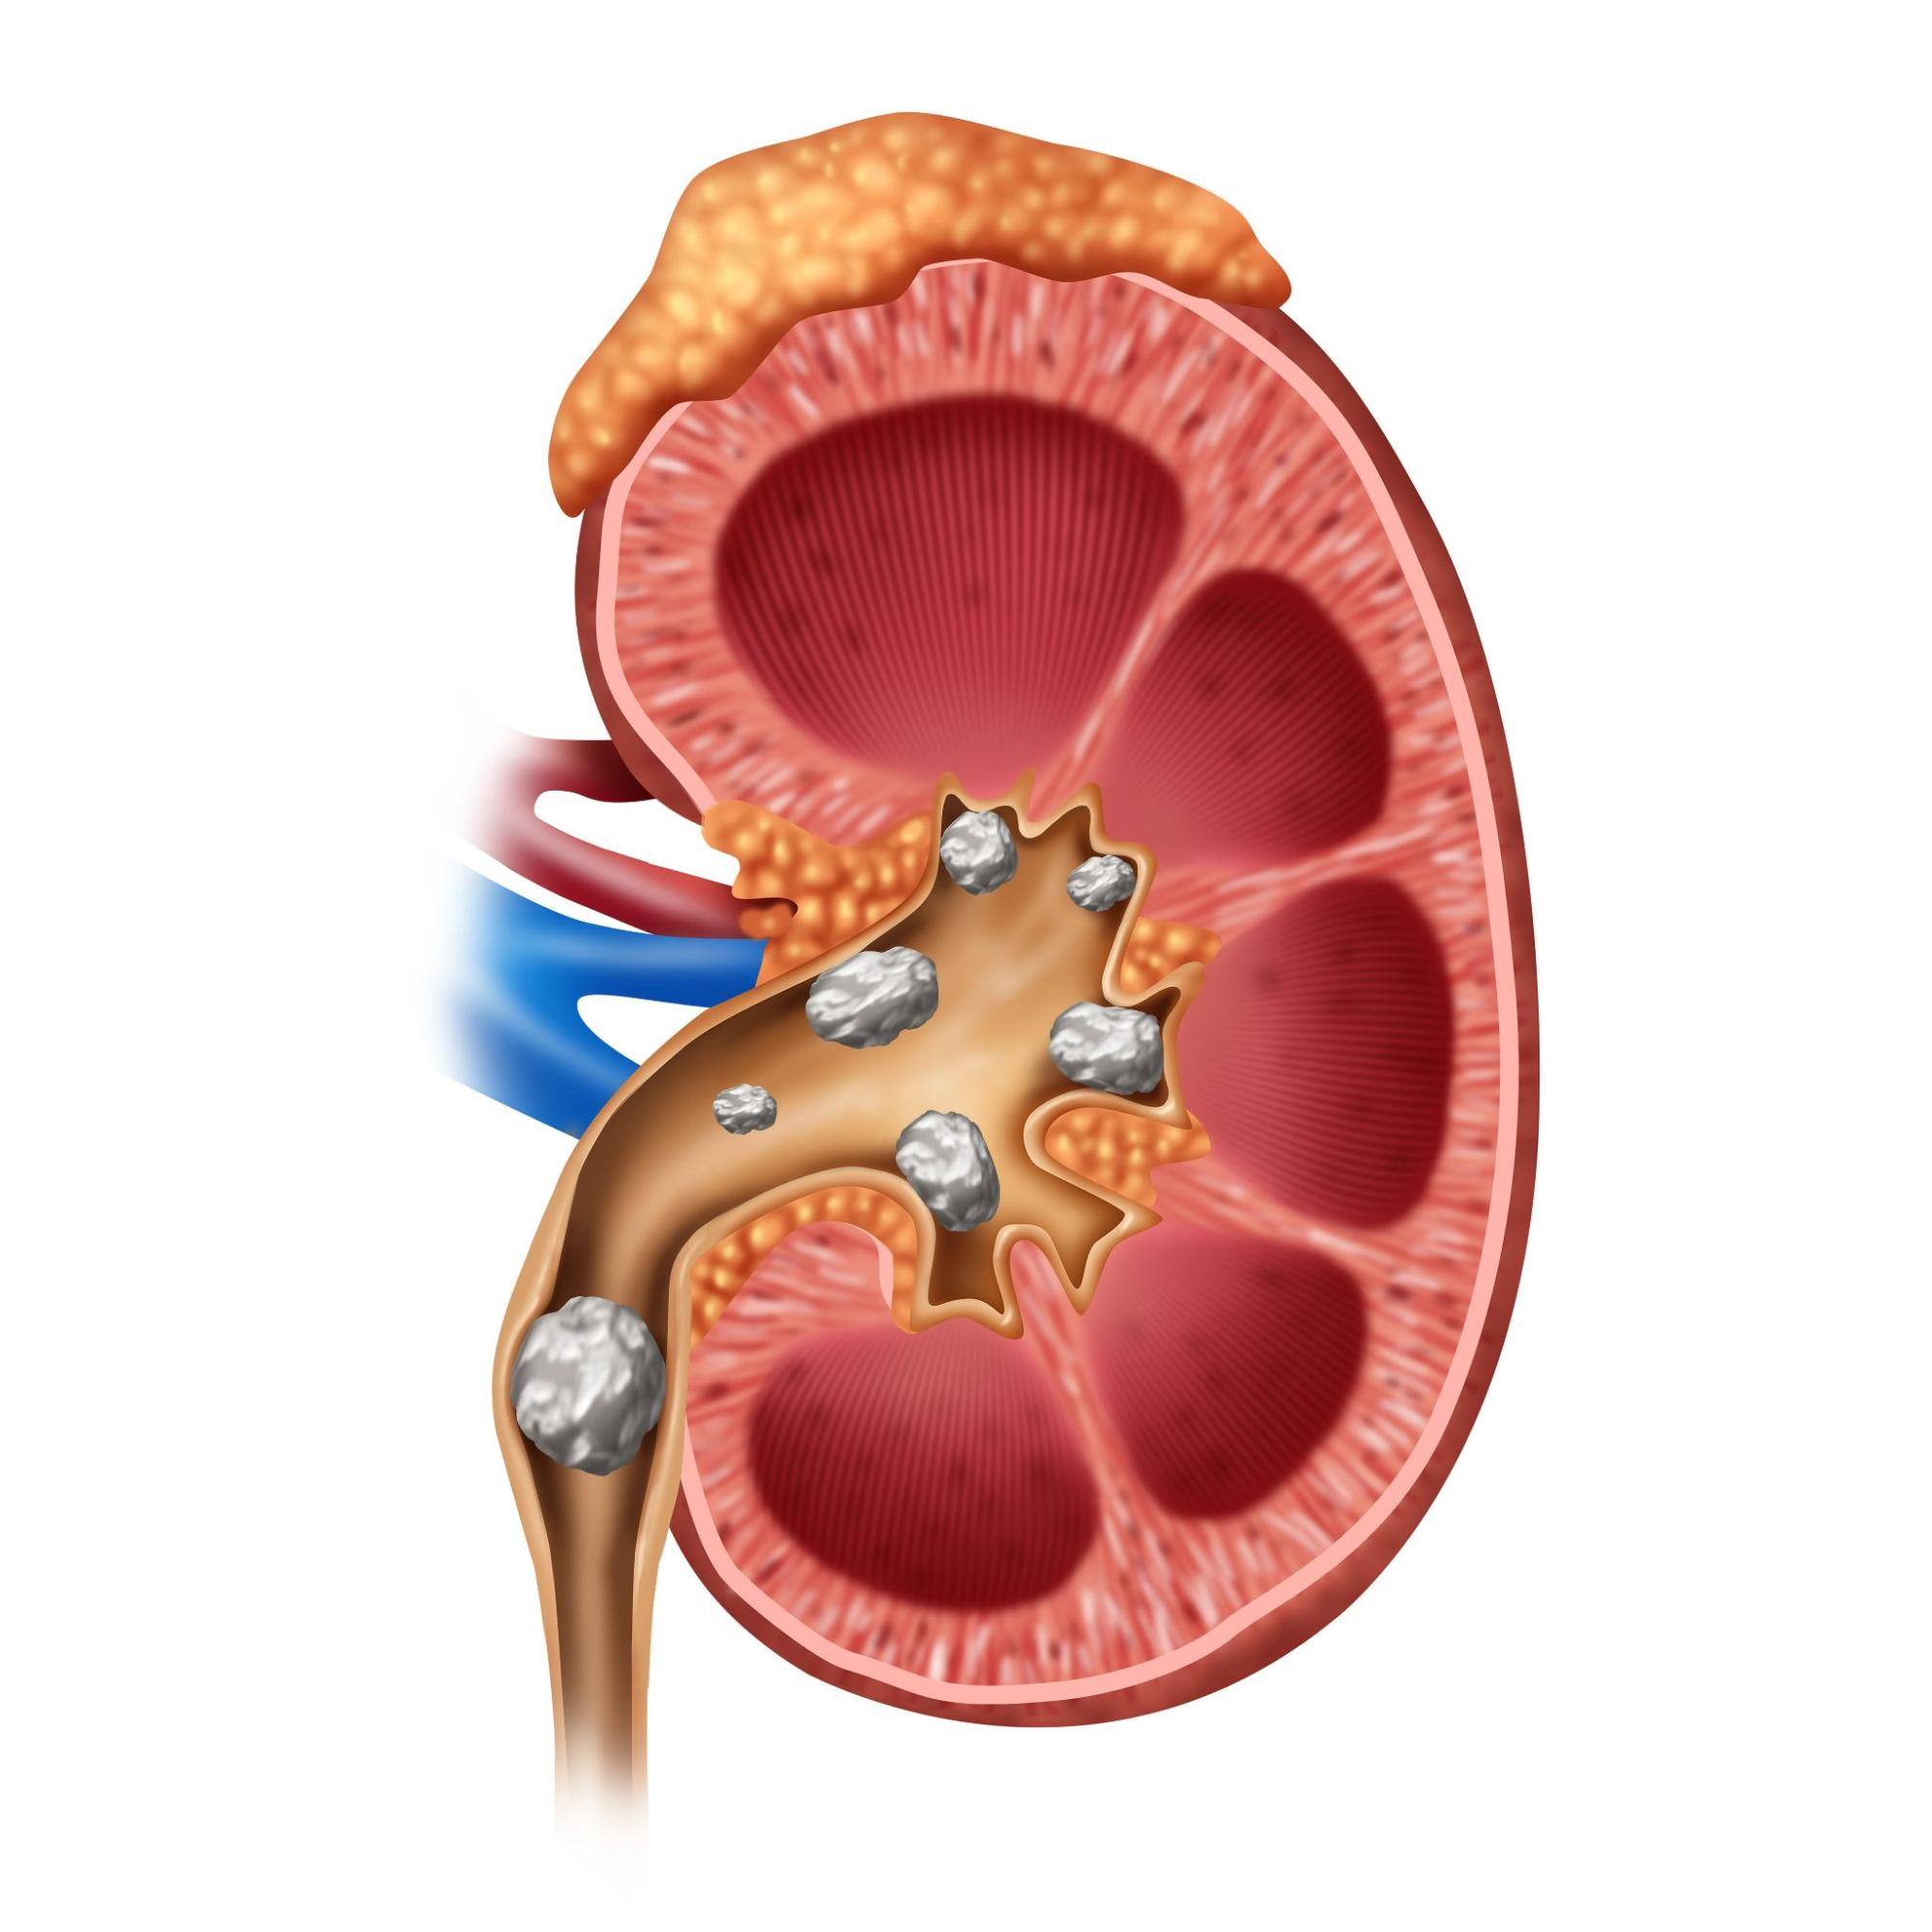 painfull kidney stone